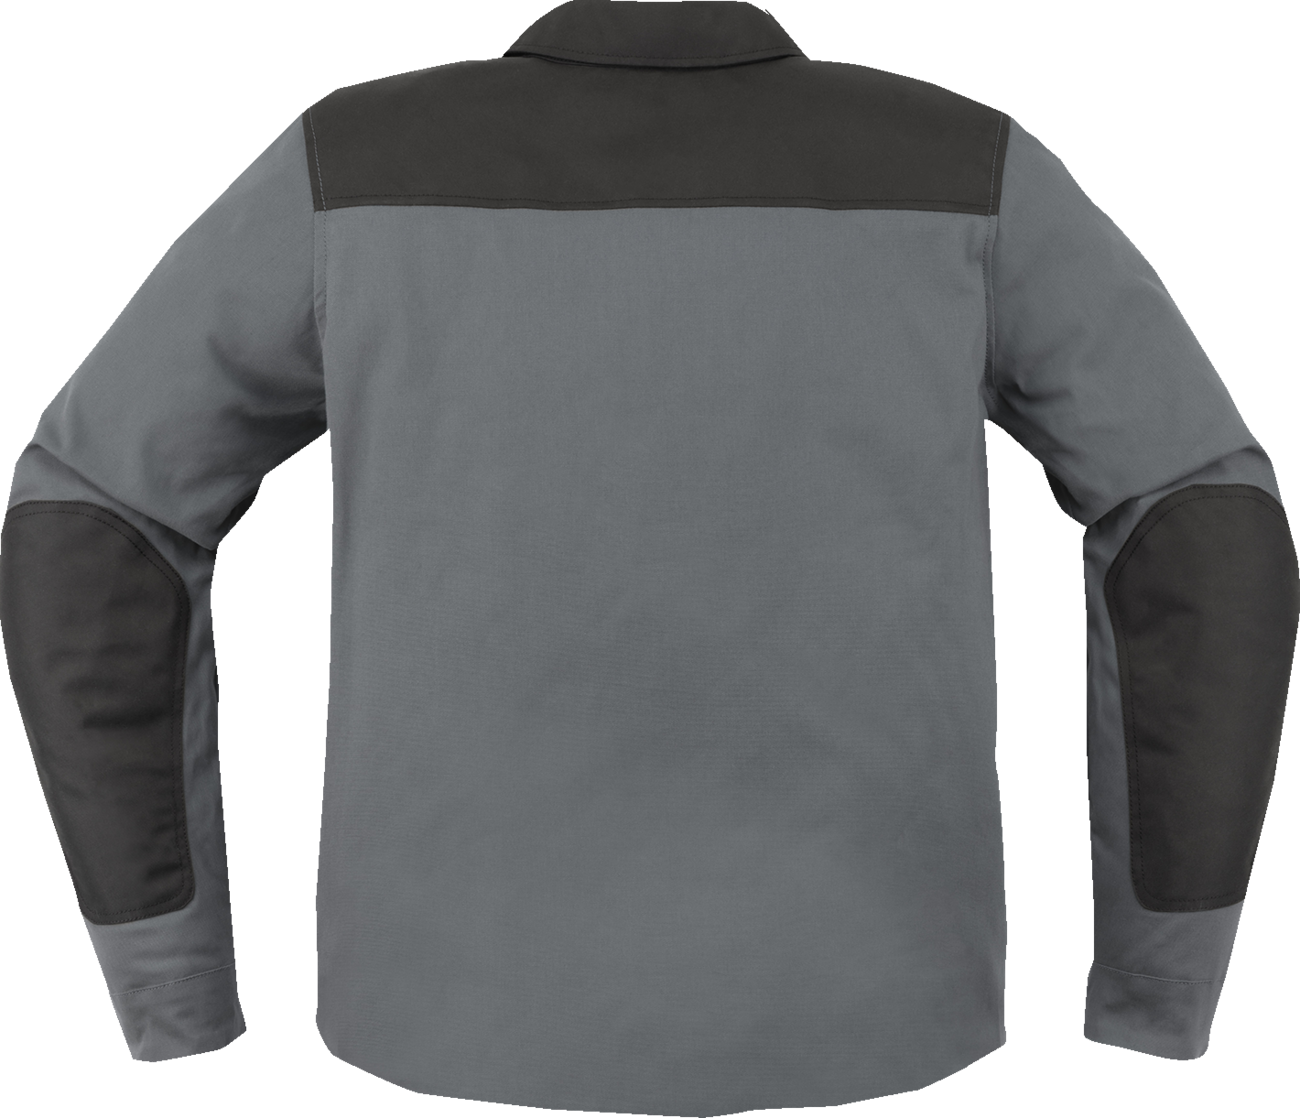 ICON Upstate Canvas CE Jacket - Gray - 2XL 2820-6245